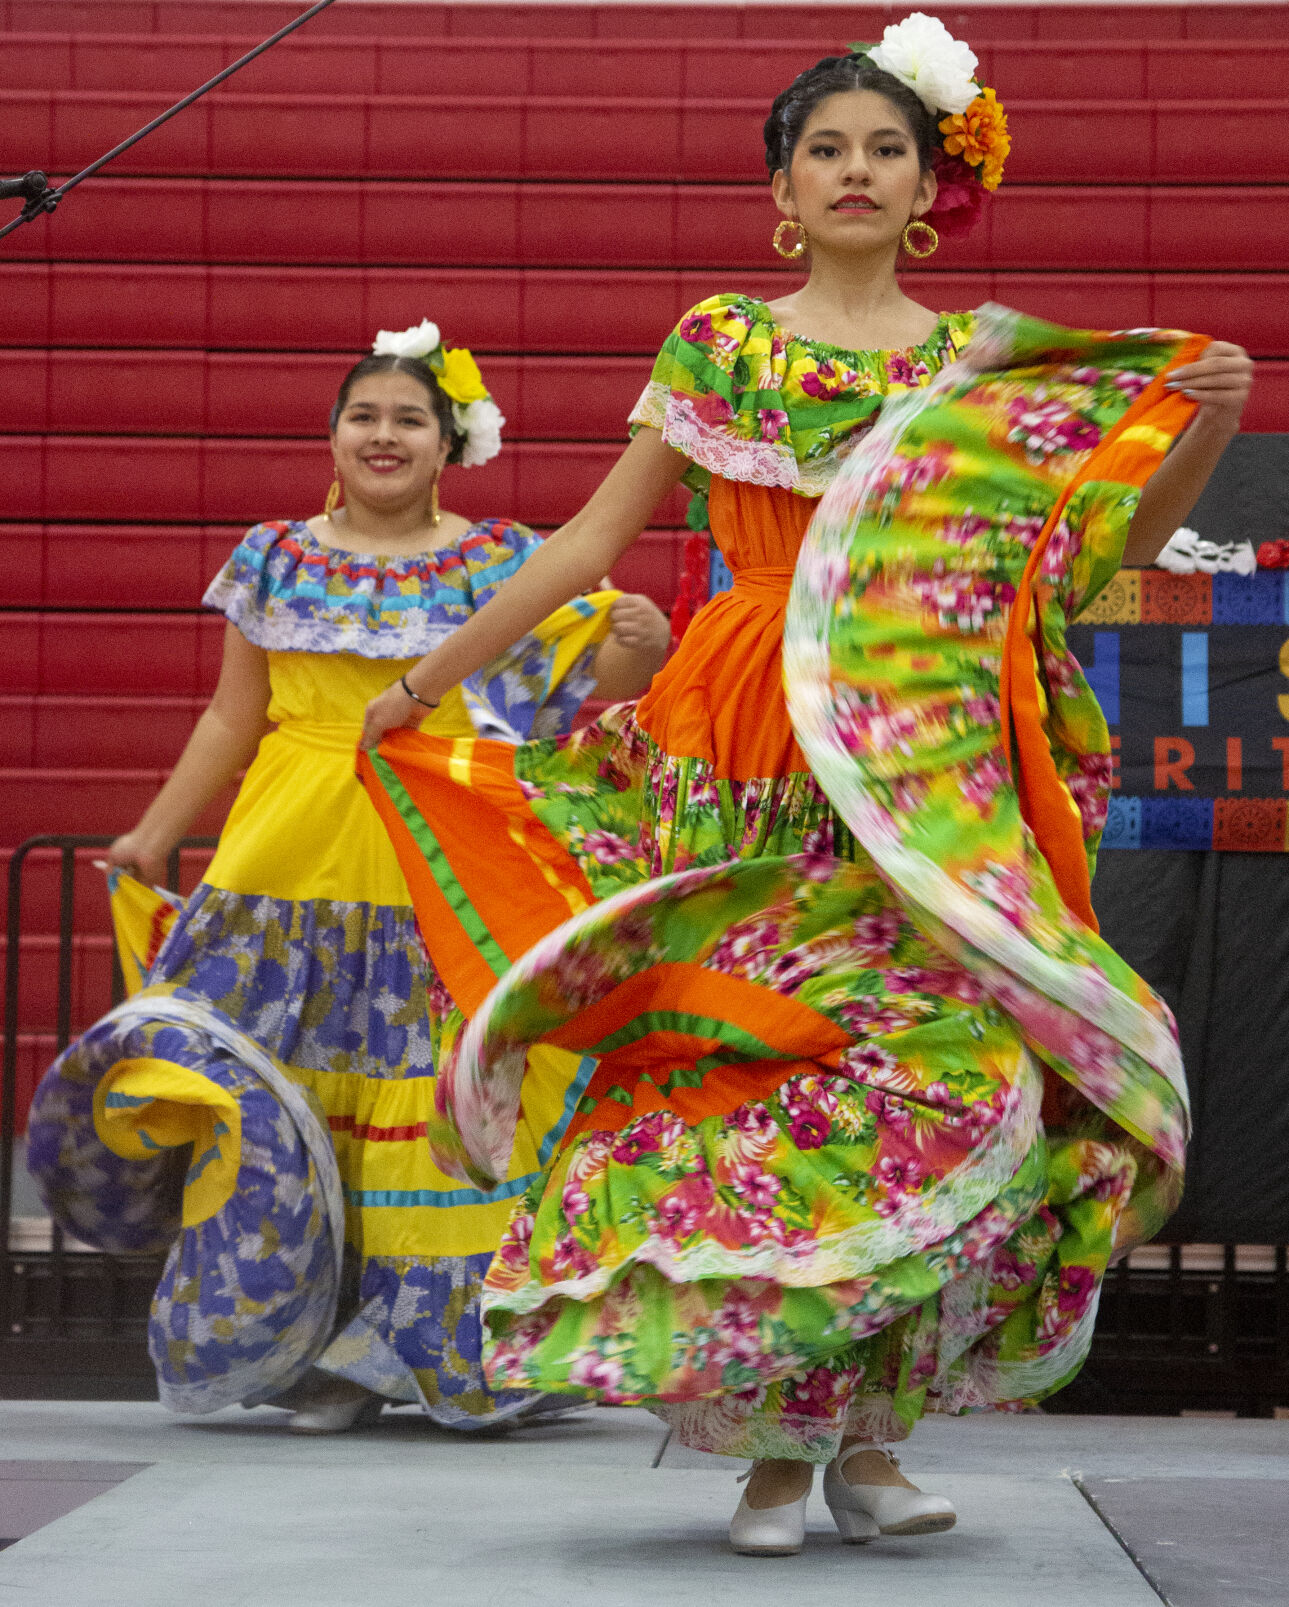 See over 30 photos of Horn High School celebrating Hispanic Heritage |  Mesquite News | starlocalmedia.com